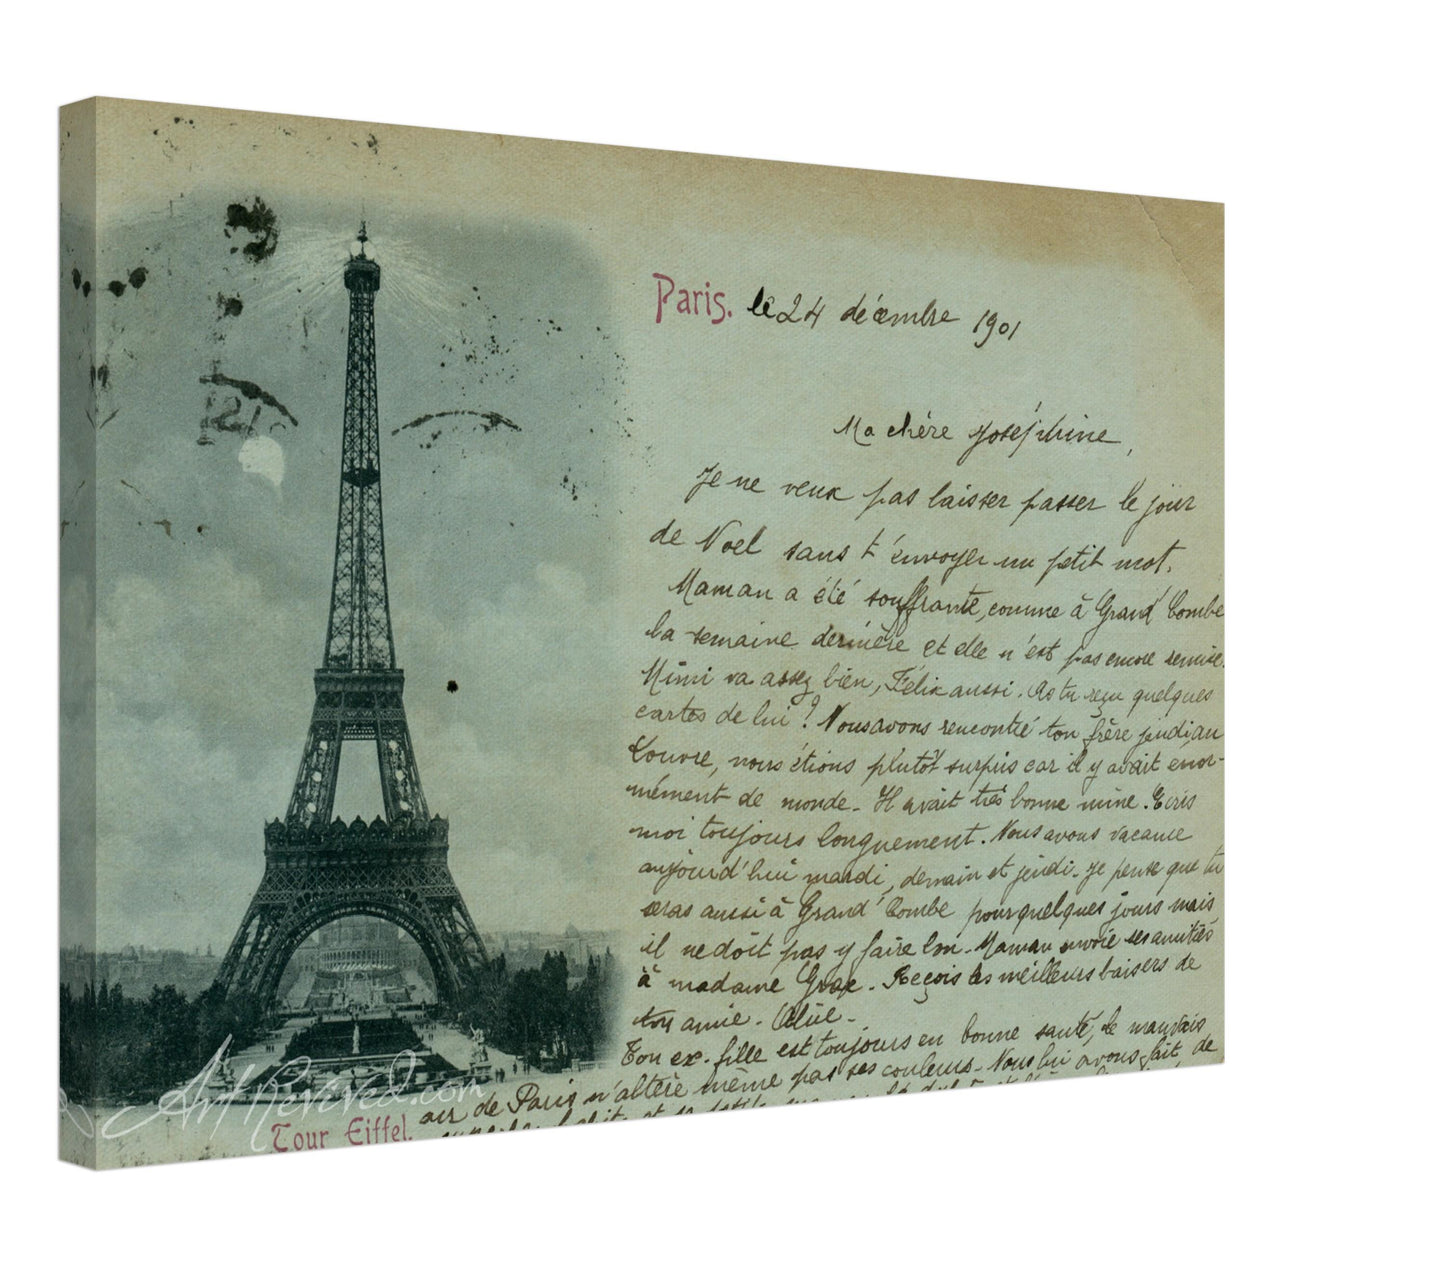 The Eiffel Tower 12-24-1901